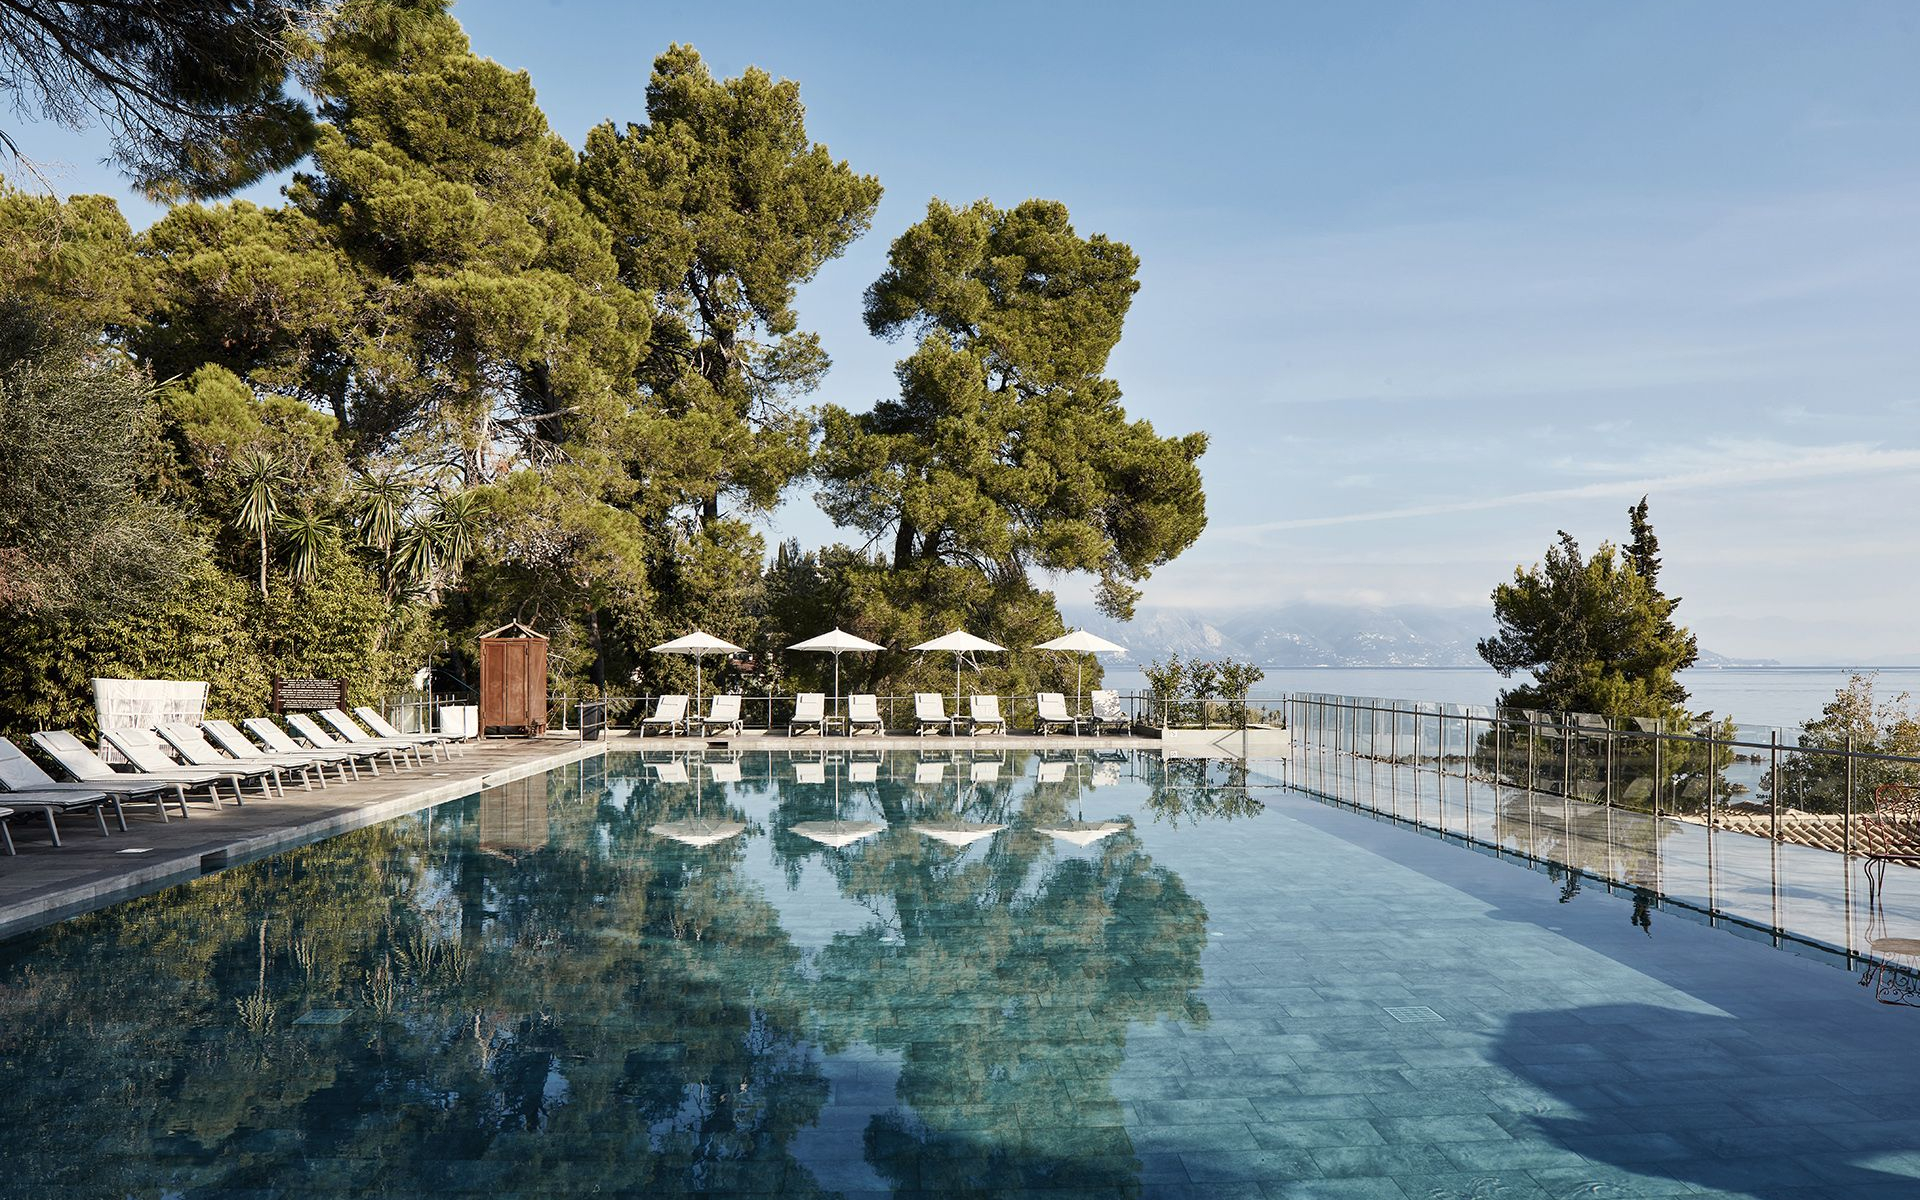 Kontokali Bay Resort & Spa Kontokali Corfu